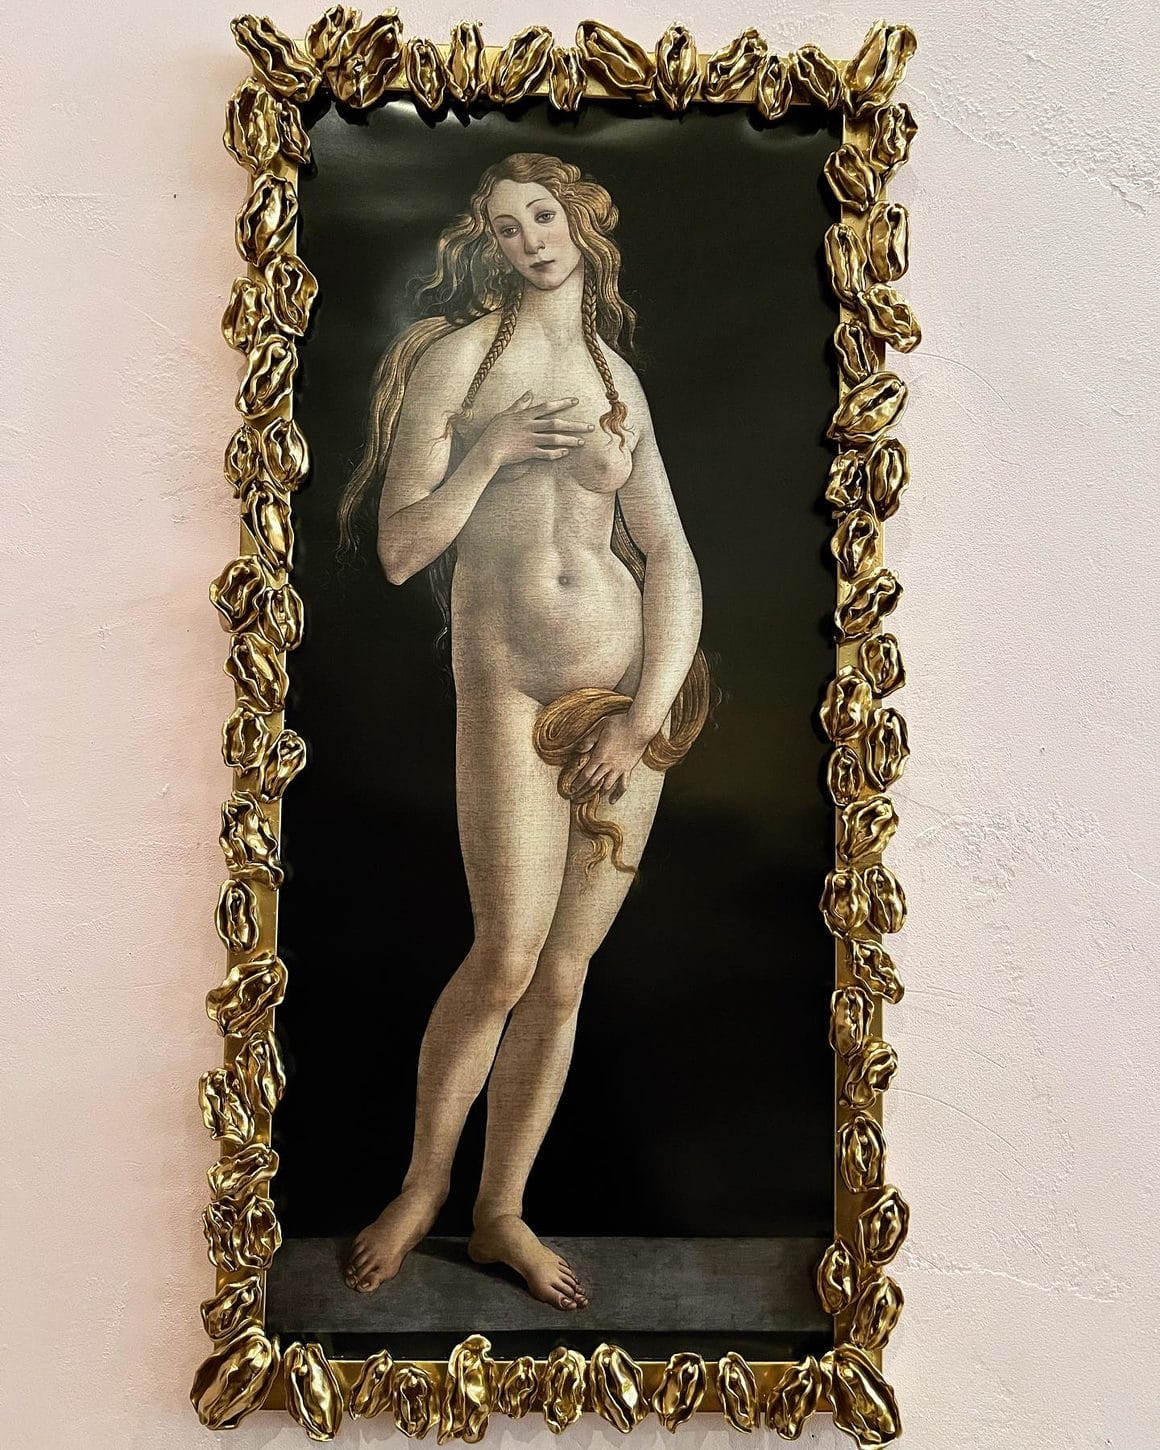 vulves entourant la Venus pudica de Botticelli